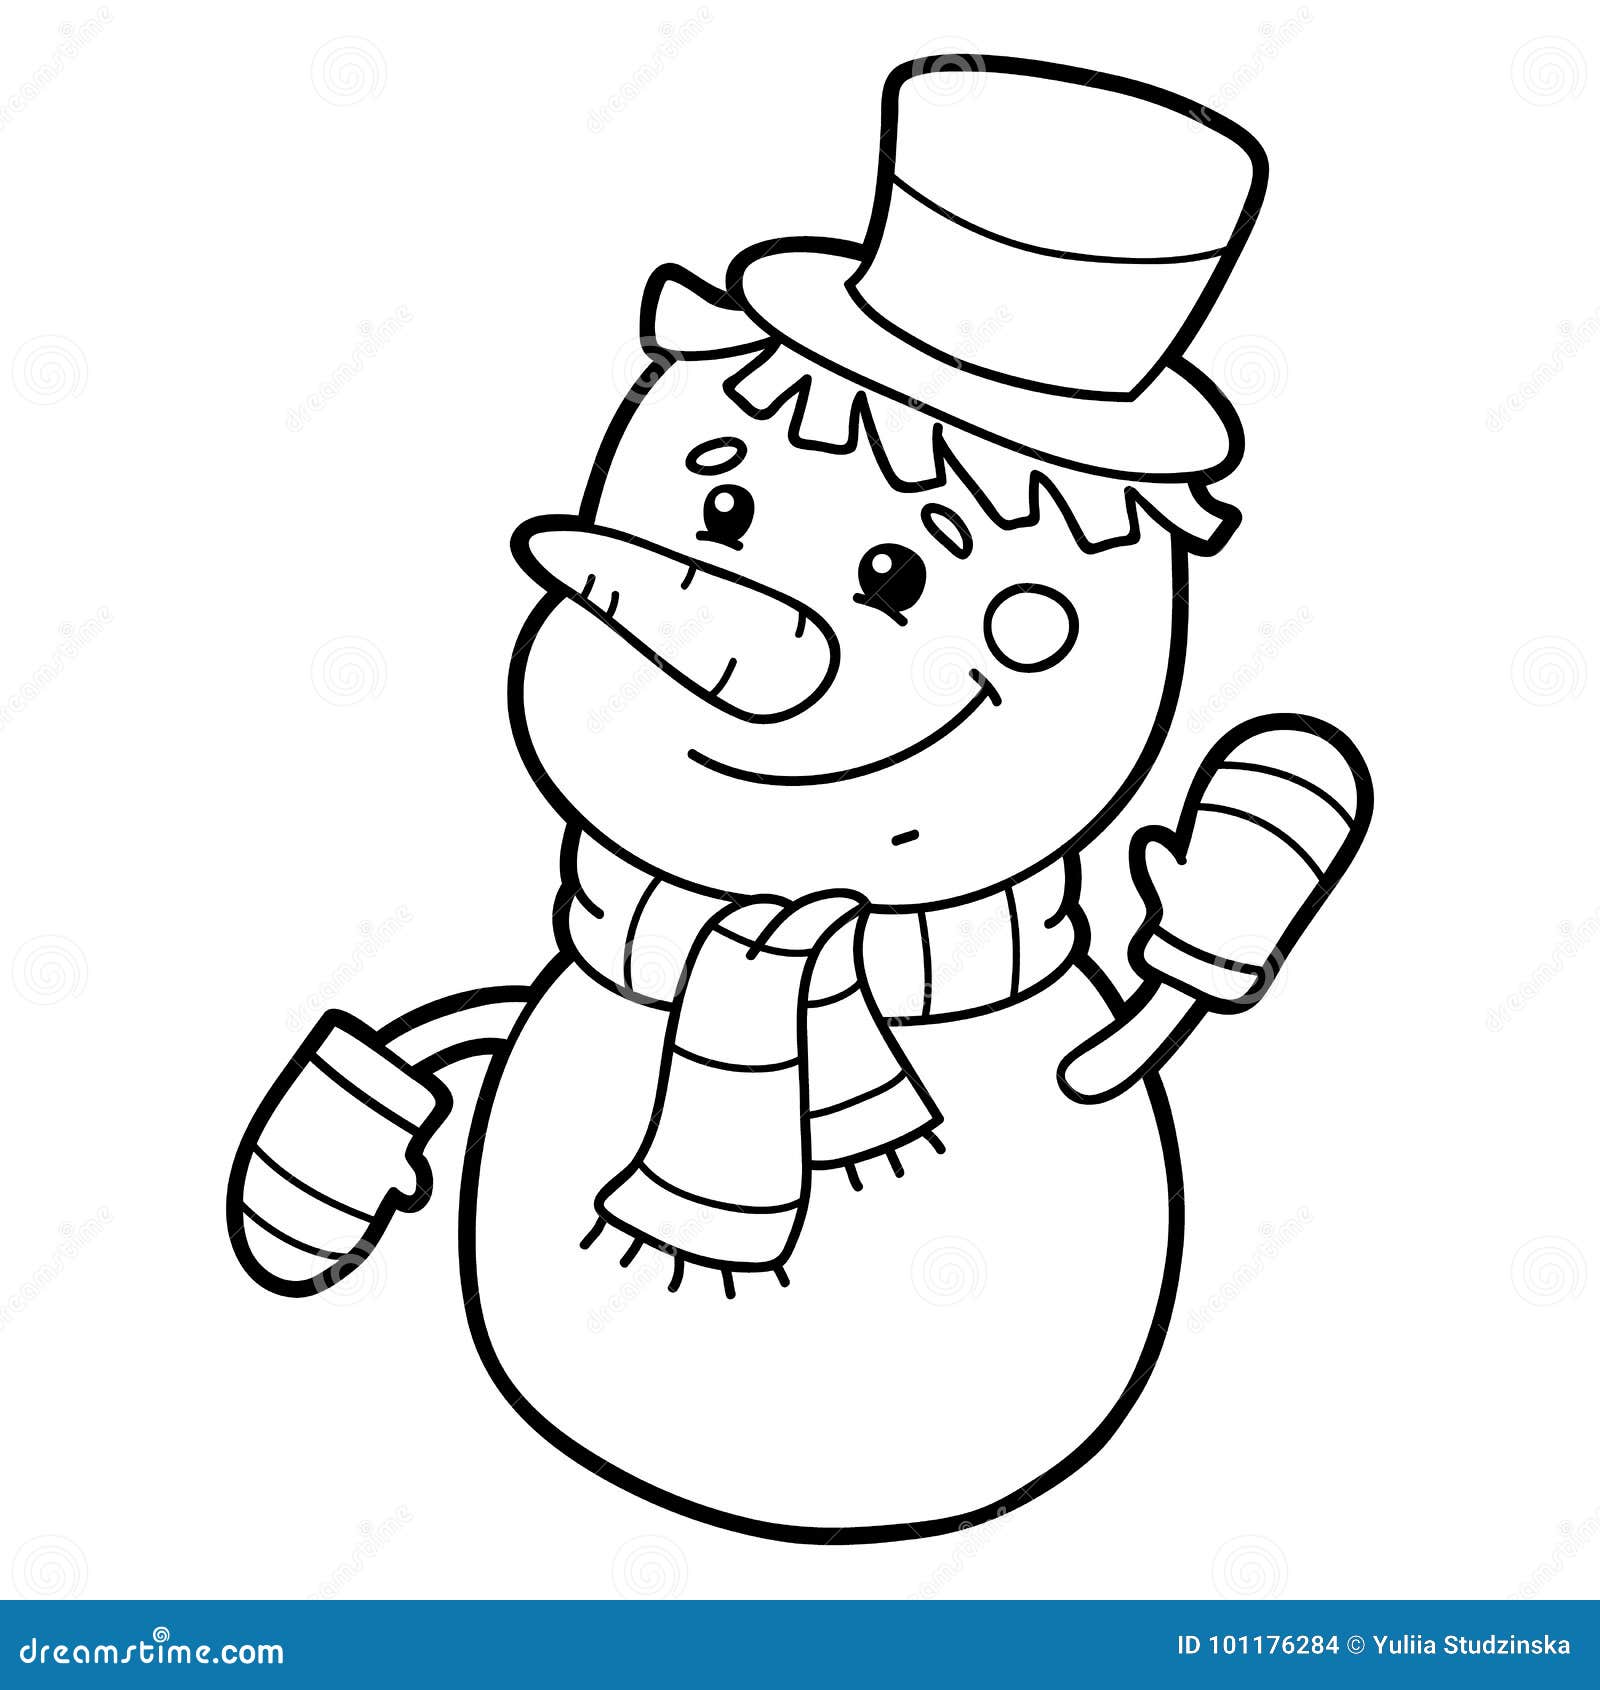 Snowman outline stock vector. Illustration of cartoon - 101176284